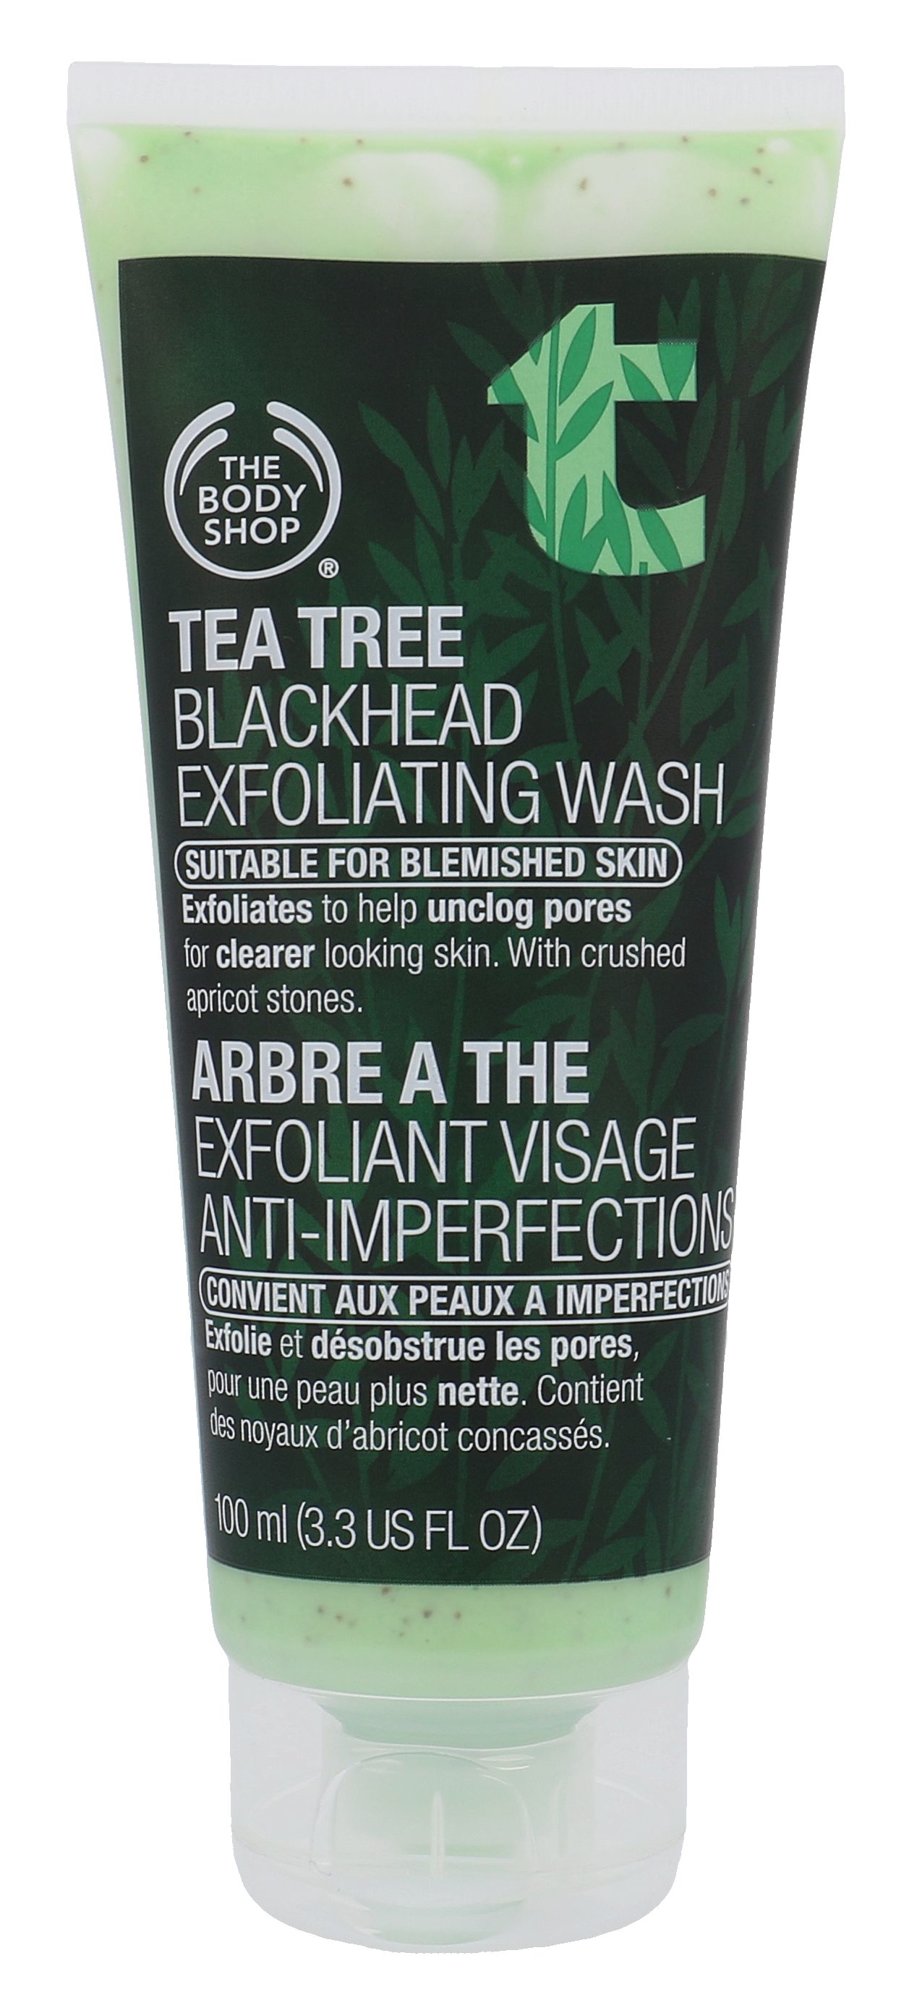 The Body Shop Tea Tree Blackhead Exfoliating Wash